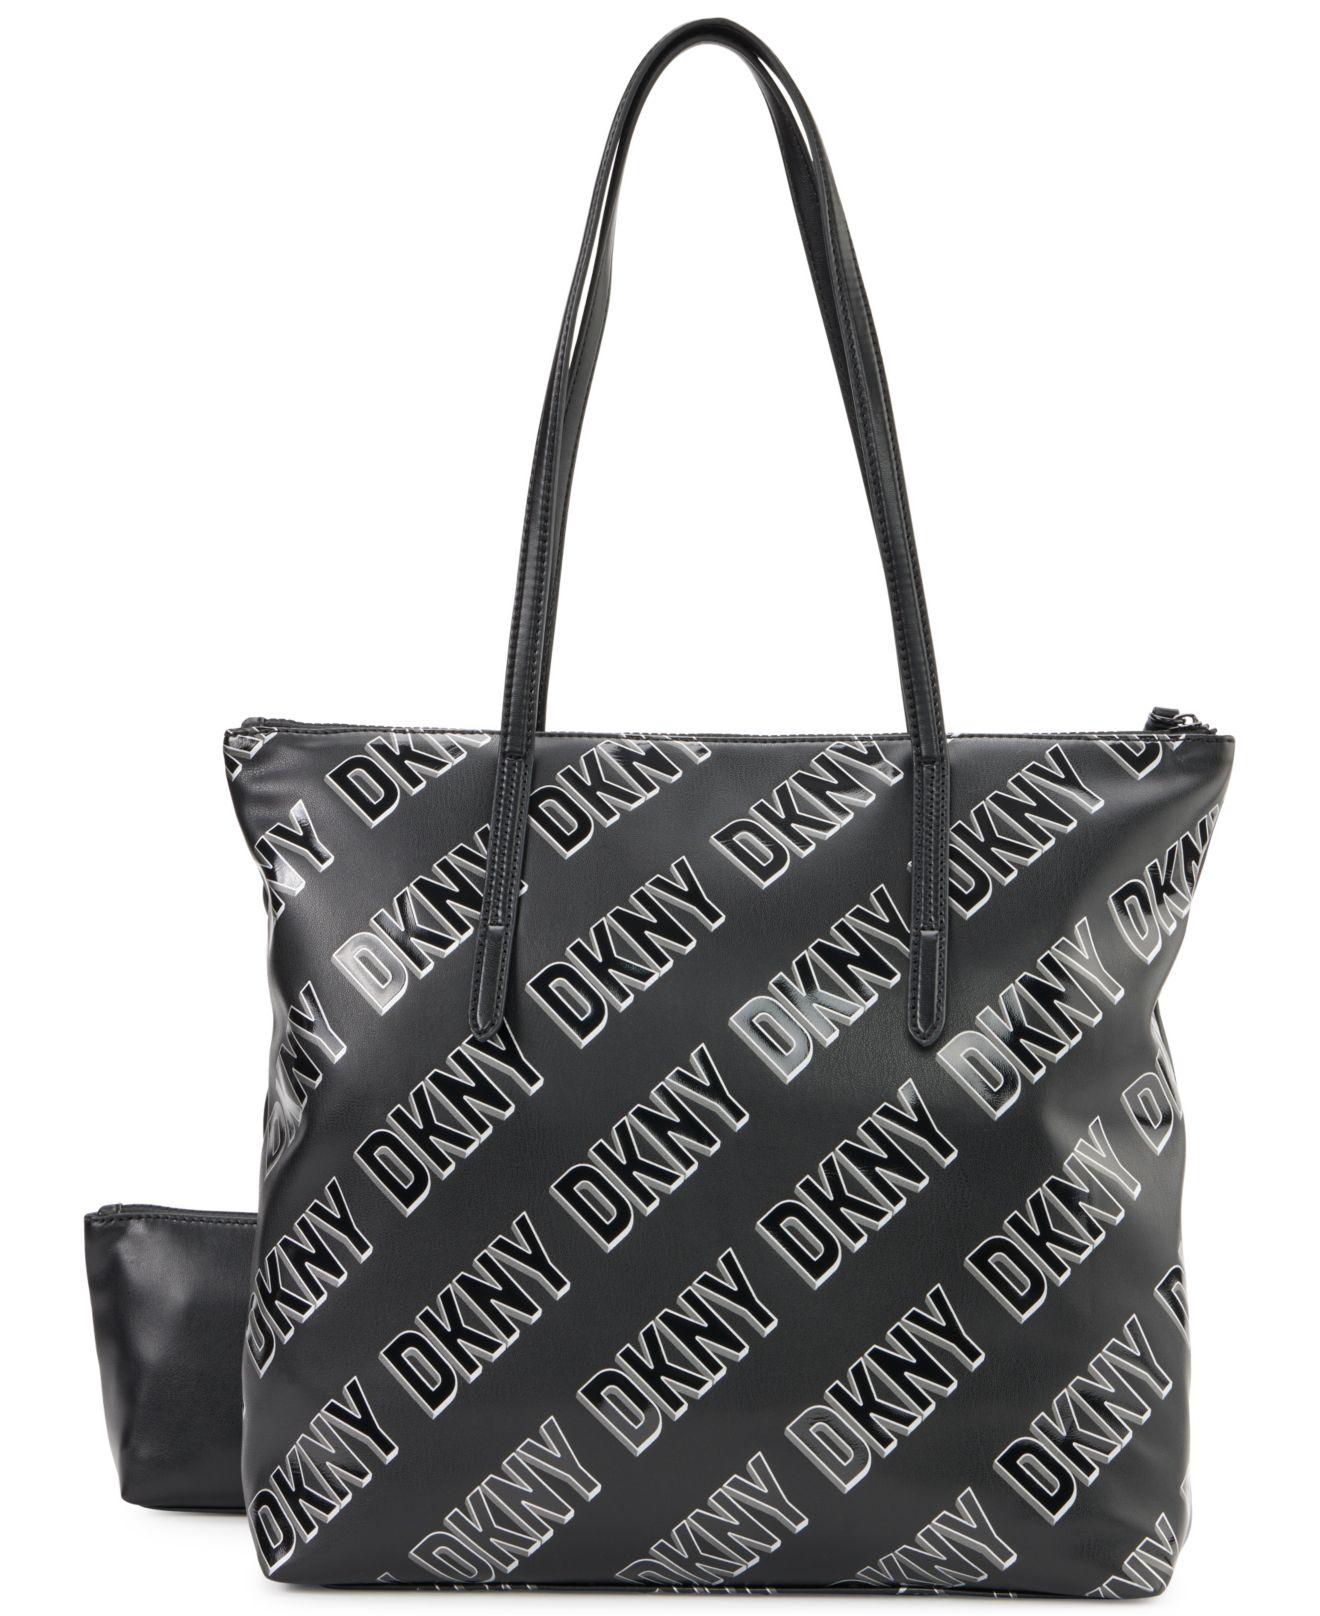 DKNY Phoenix 2 In 1 Tote Handbag Set in Black | Lyst